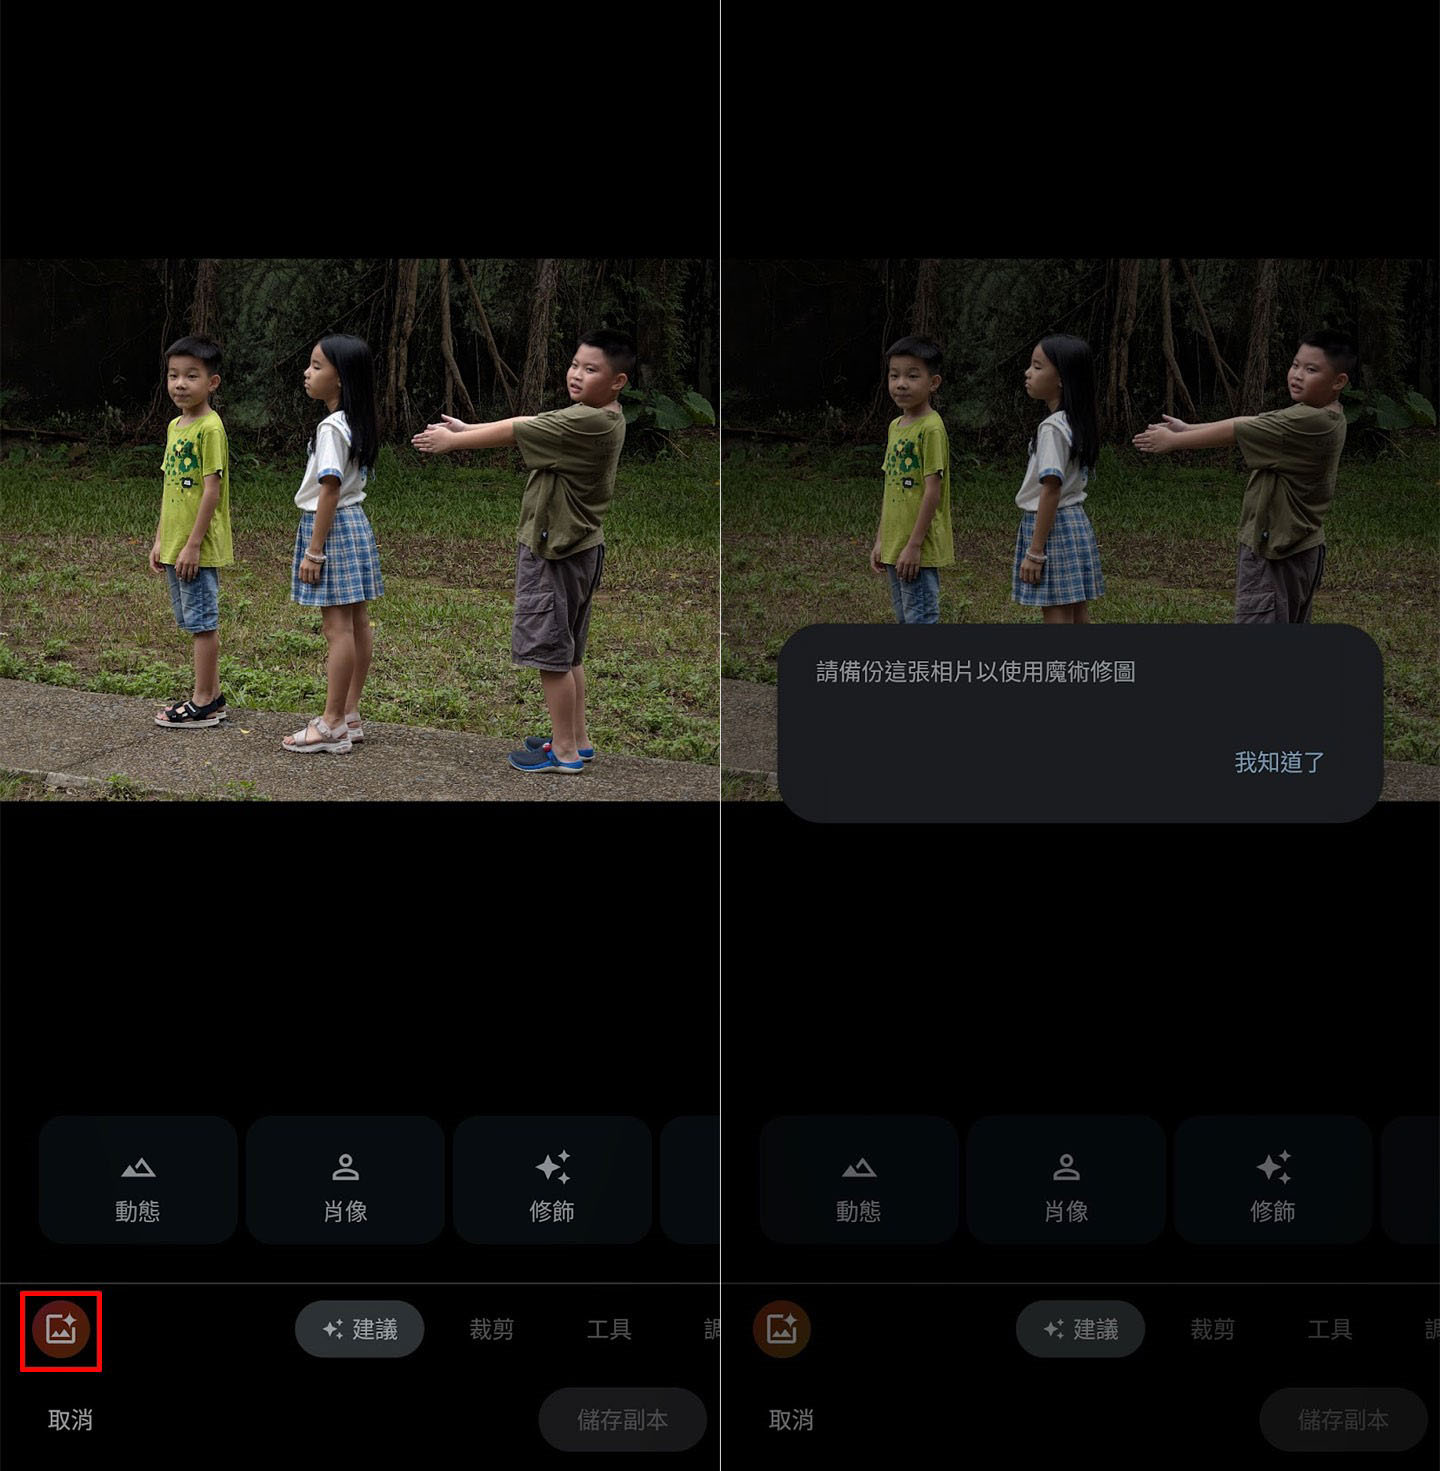 Pixel 8 Pro 的「術修圖」功能，讓使用者更自由地編修畫面的人物 (或物件)，以上圖的照片為例，可以直接進行前景人物的消除或是位置的移動，整個操作過程非常簡單！在進入影像編輯介面後，點選左下角的紅框處的「術修圖」按鈕，即可進入功能，不過前提是這張照片有透過備份上傳至 Google 相簿才能使用，若是畫面如圖右出現「請備份這張照片以使用術修圖」，表示照片還未上傳，需先進行上傳才能使用！